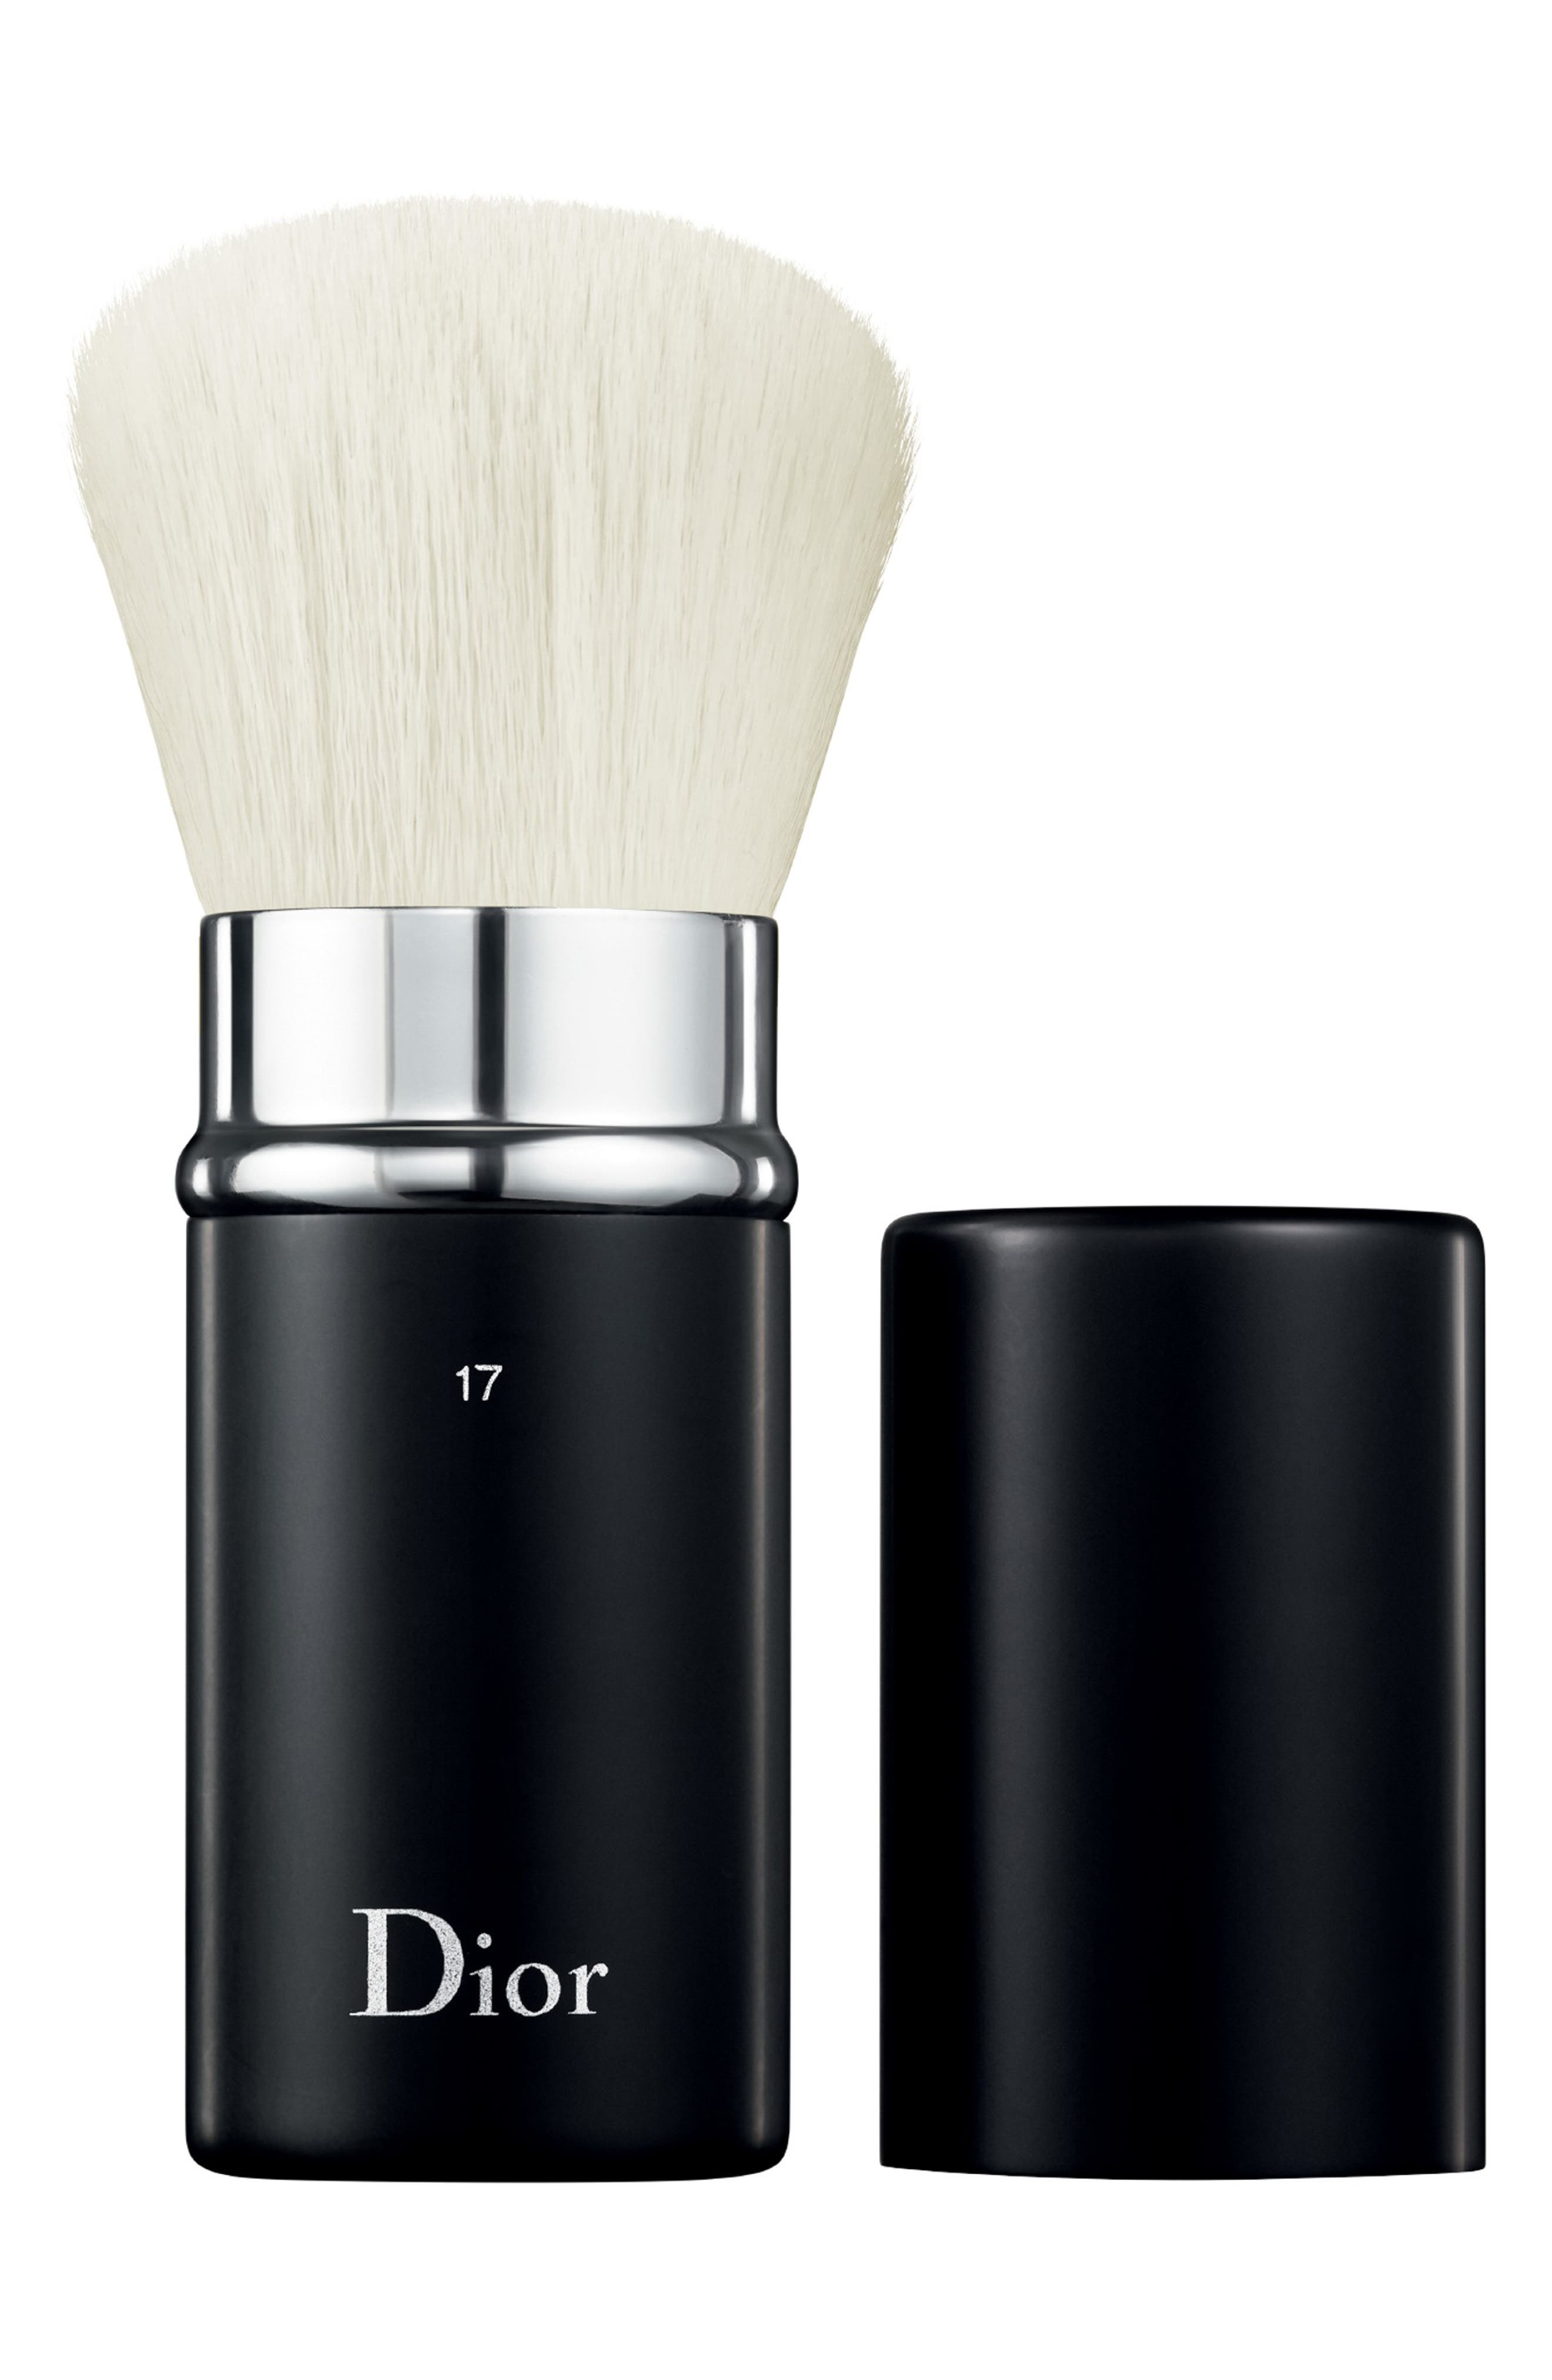 dior makeup brushes